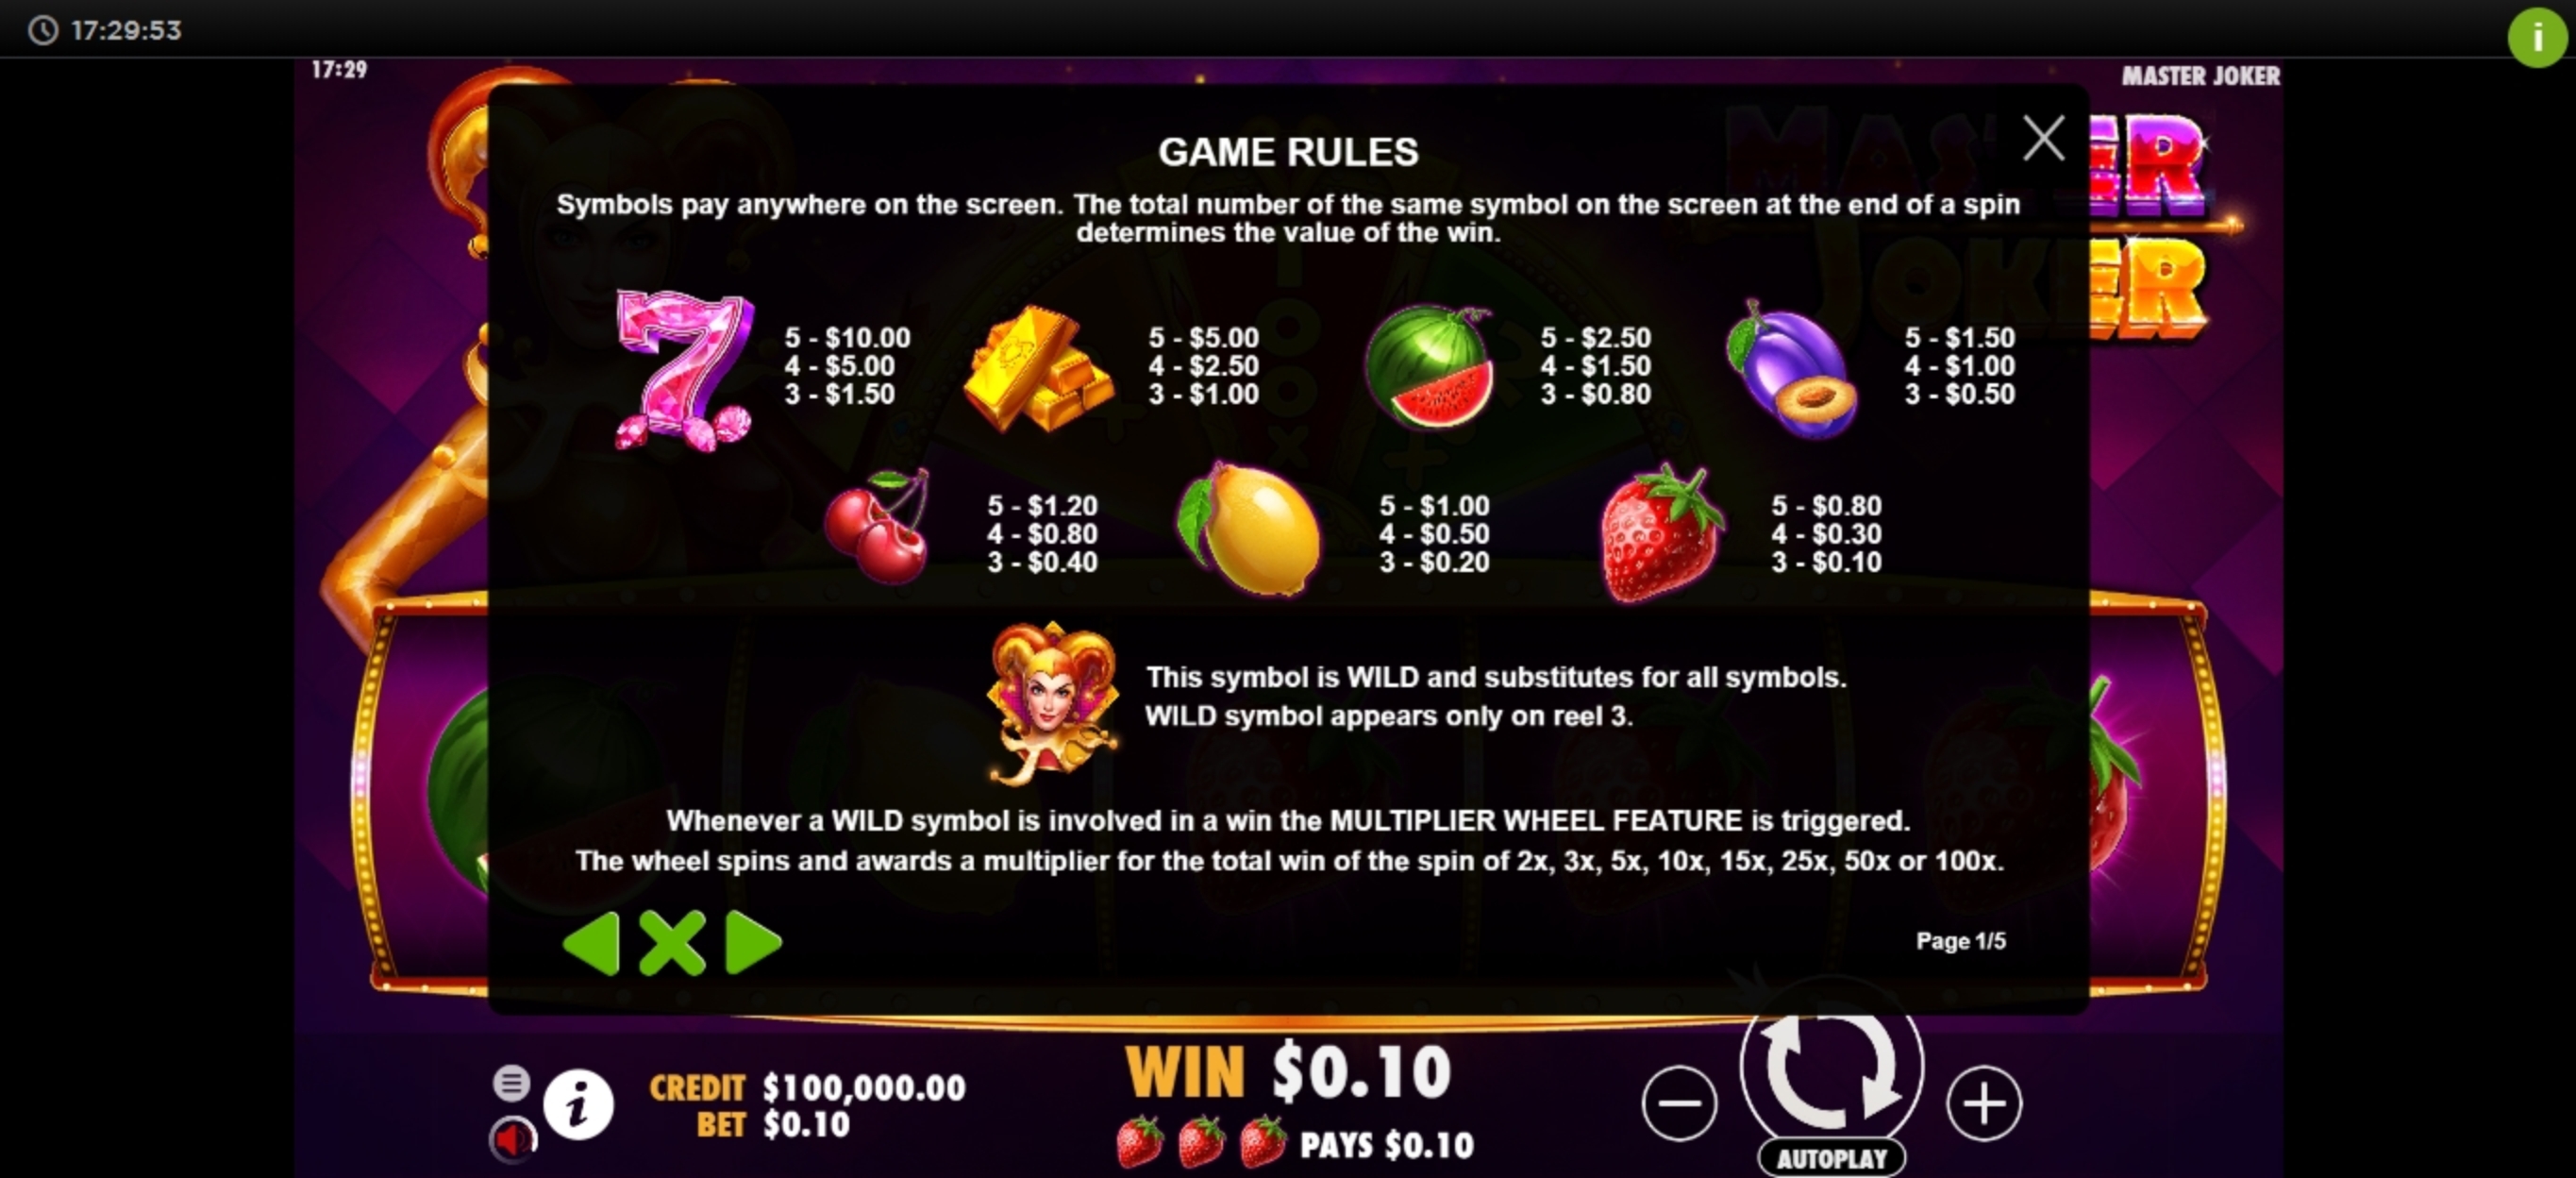 Info of Master Joker Slot Game by Pragmatic Play